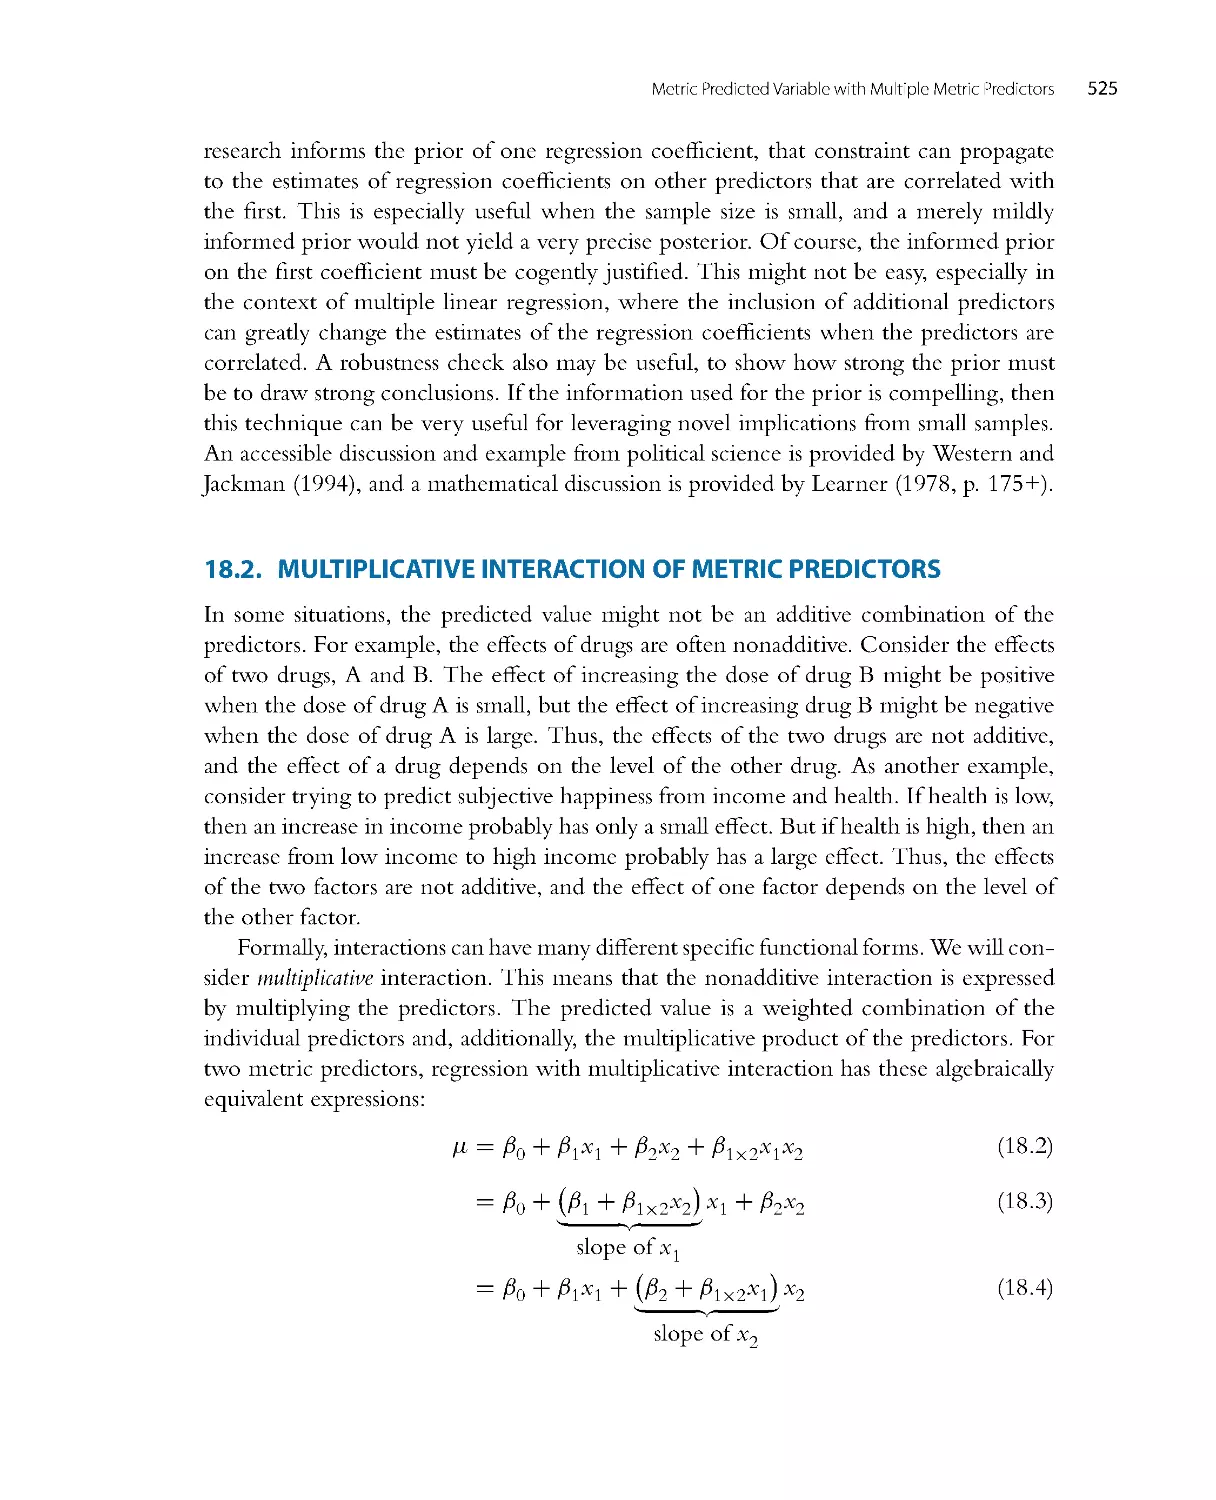 Multiplicative Interaction of Metric Predictors